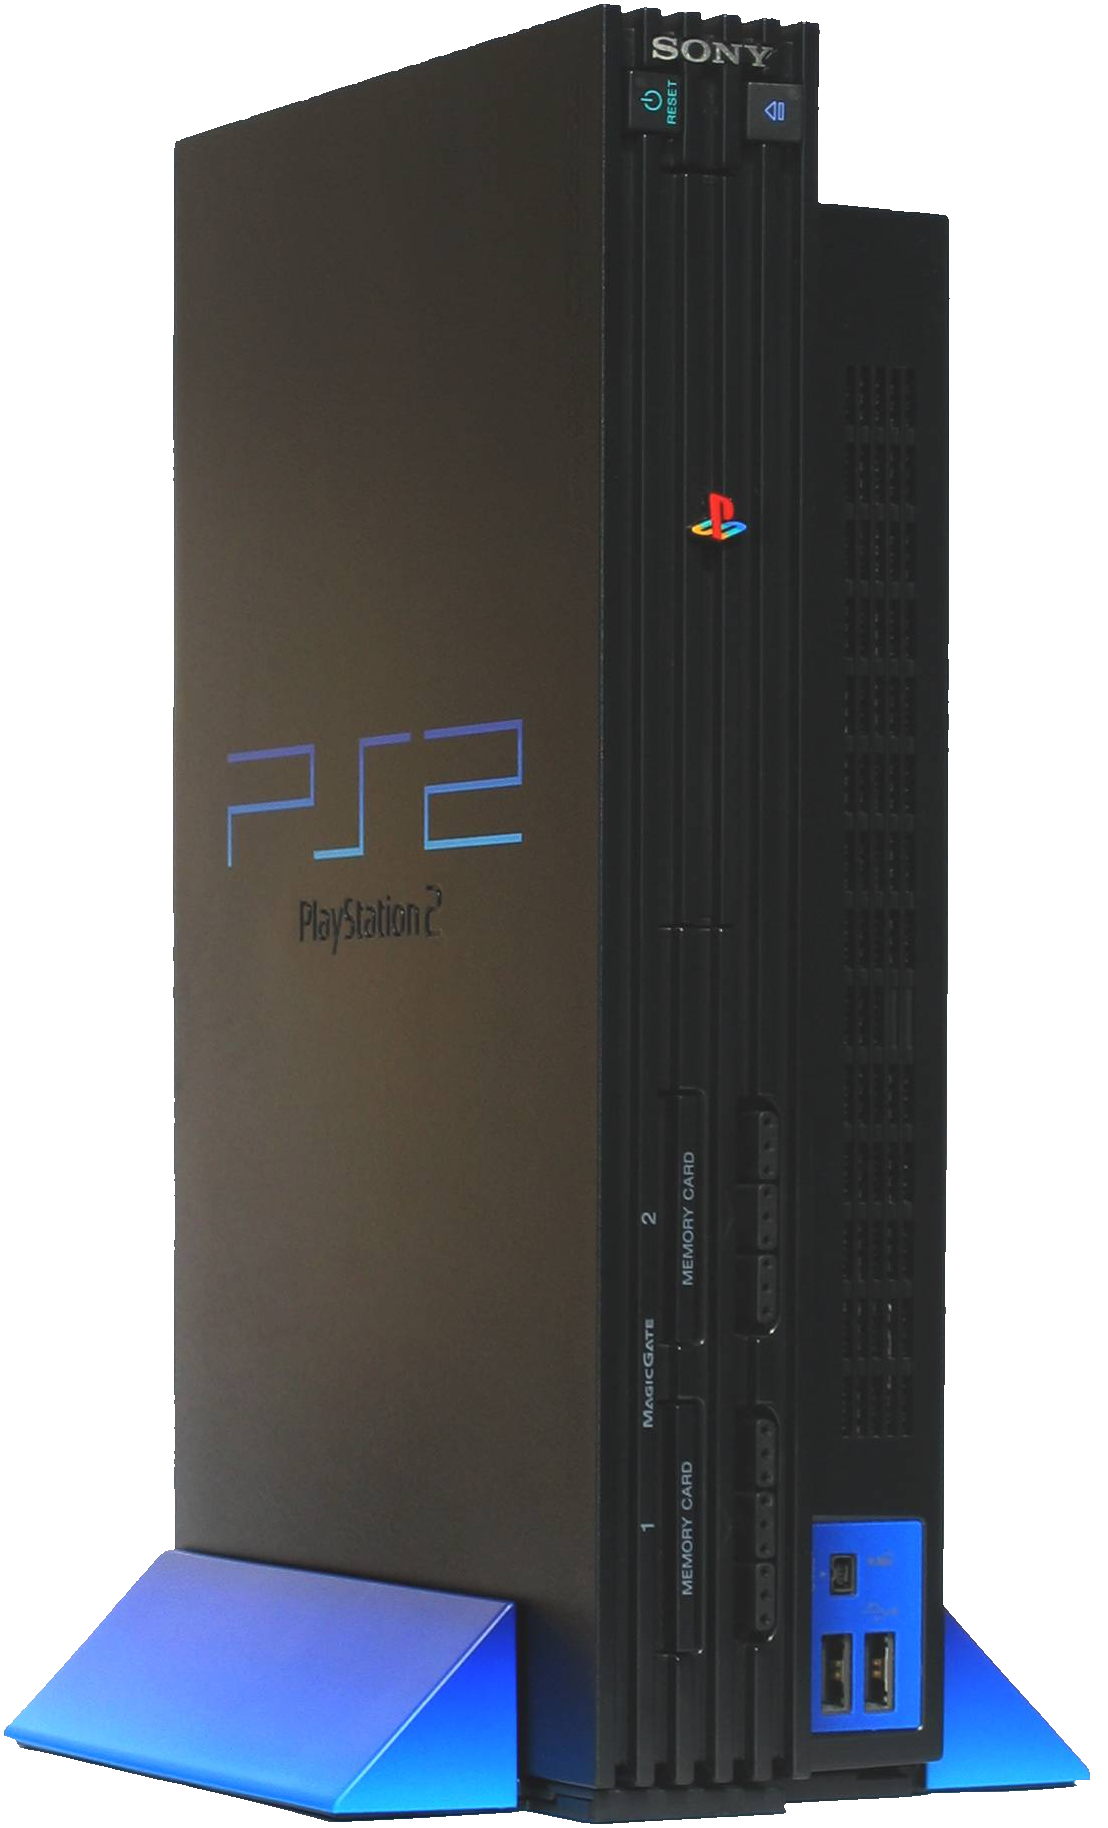 Playstation 2 #22